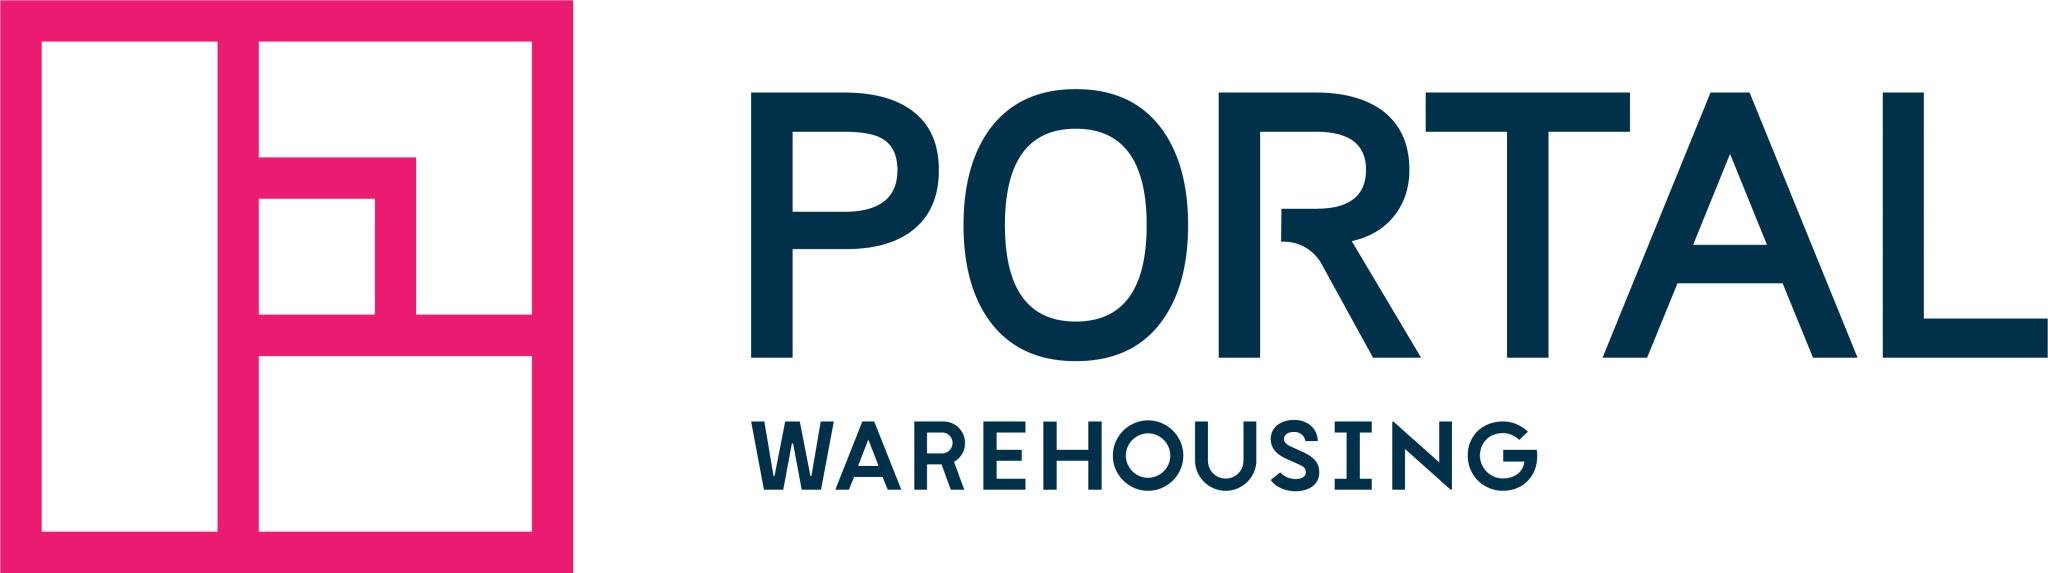 Portal Warehousing logo